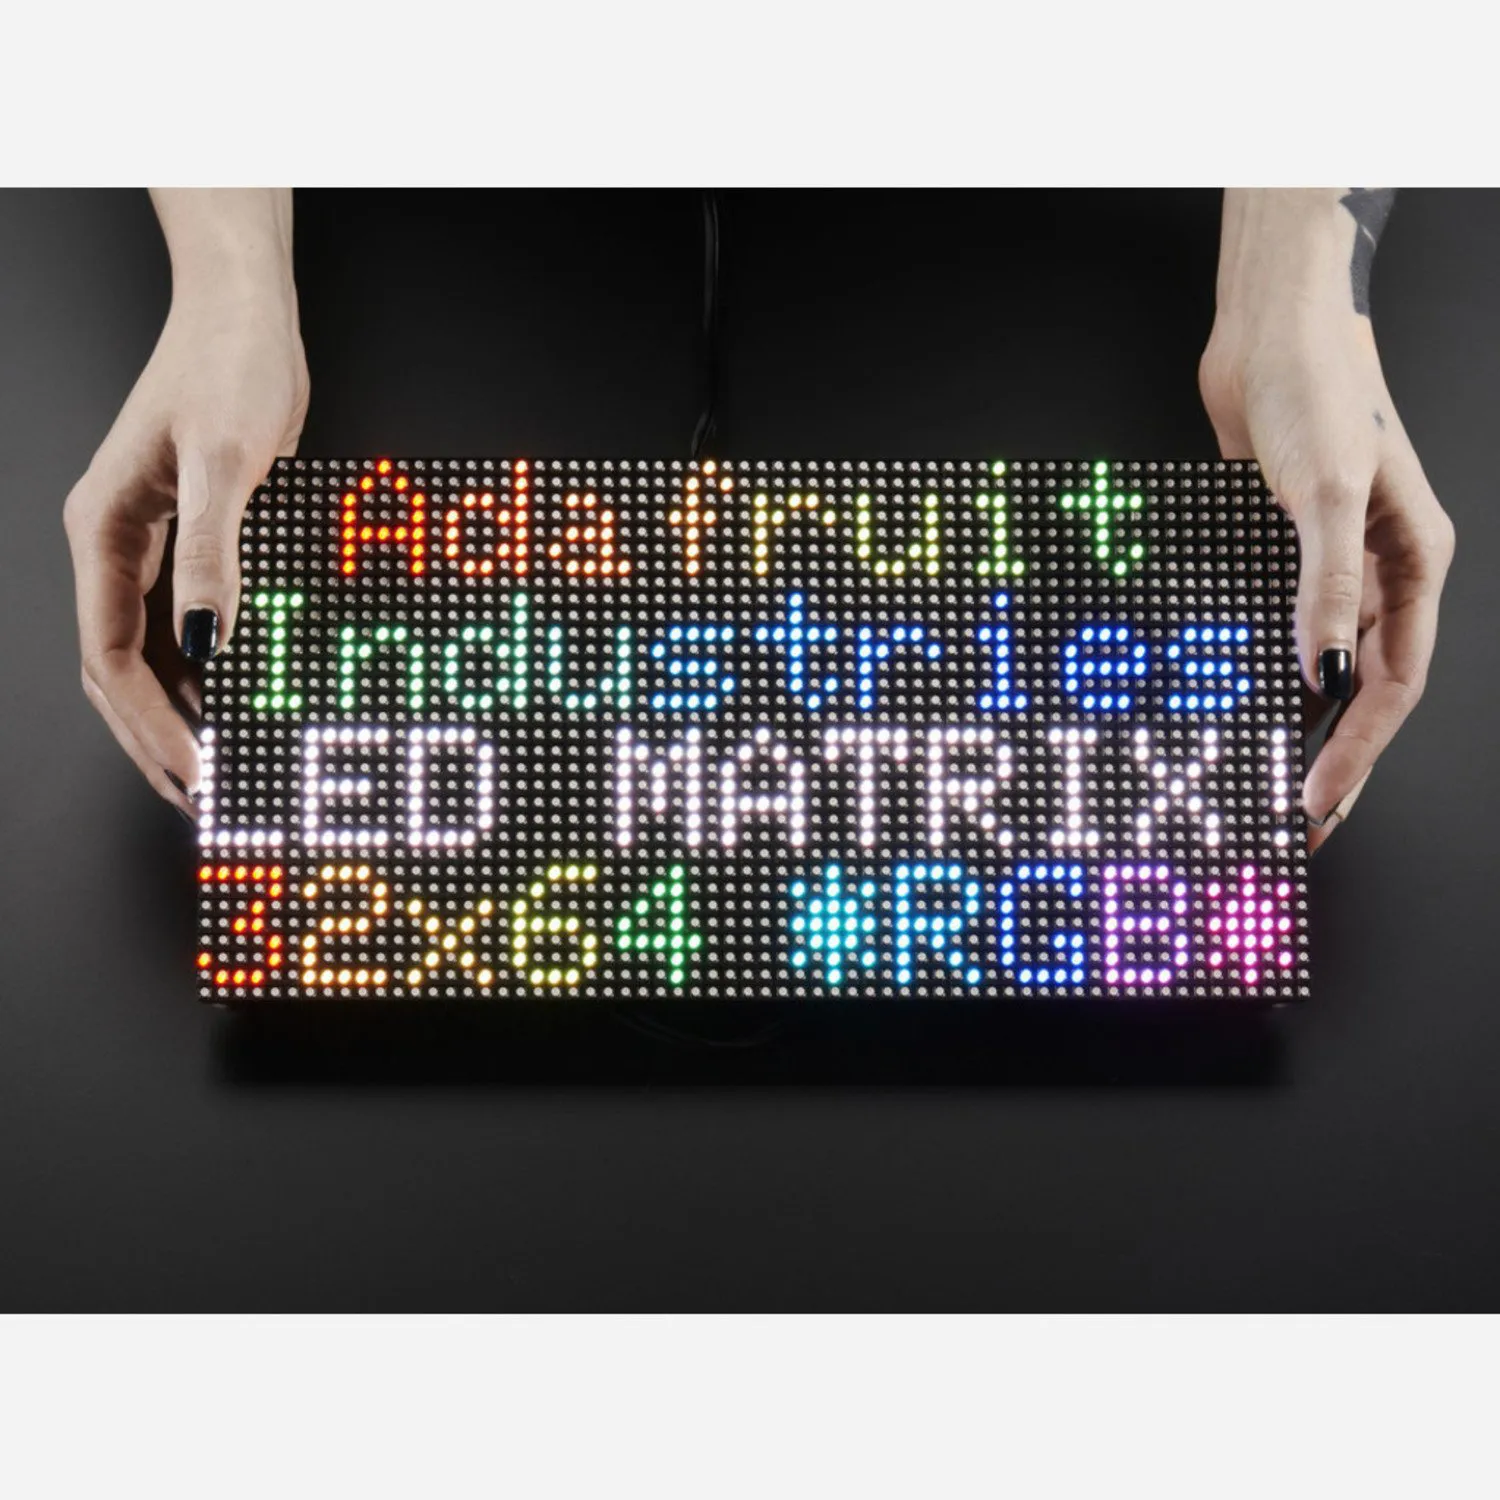 Photo of 64x32 RGB LED Matrix - 5mm pitch